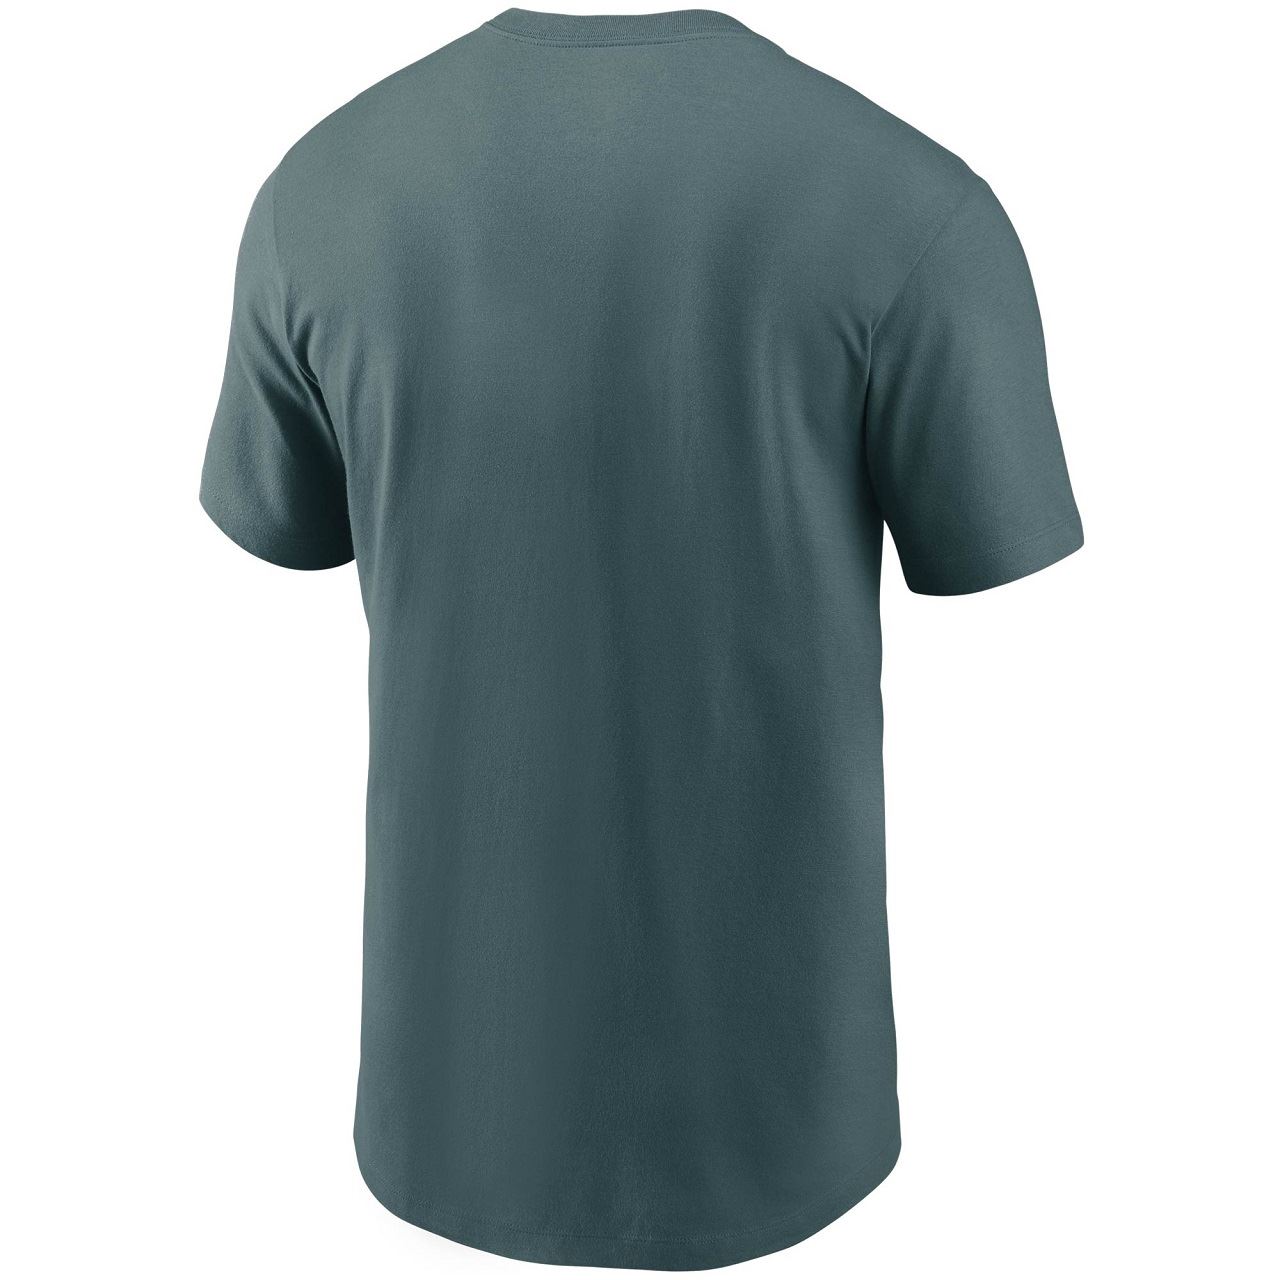 Philadelphia Eagles NFL Split Team Name Essential Tee Sport Teal T-Shirt Nike